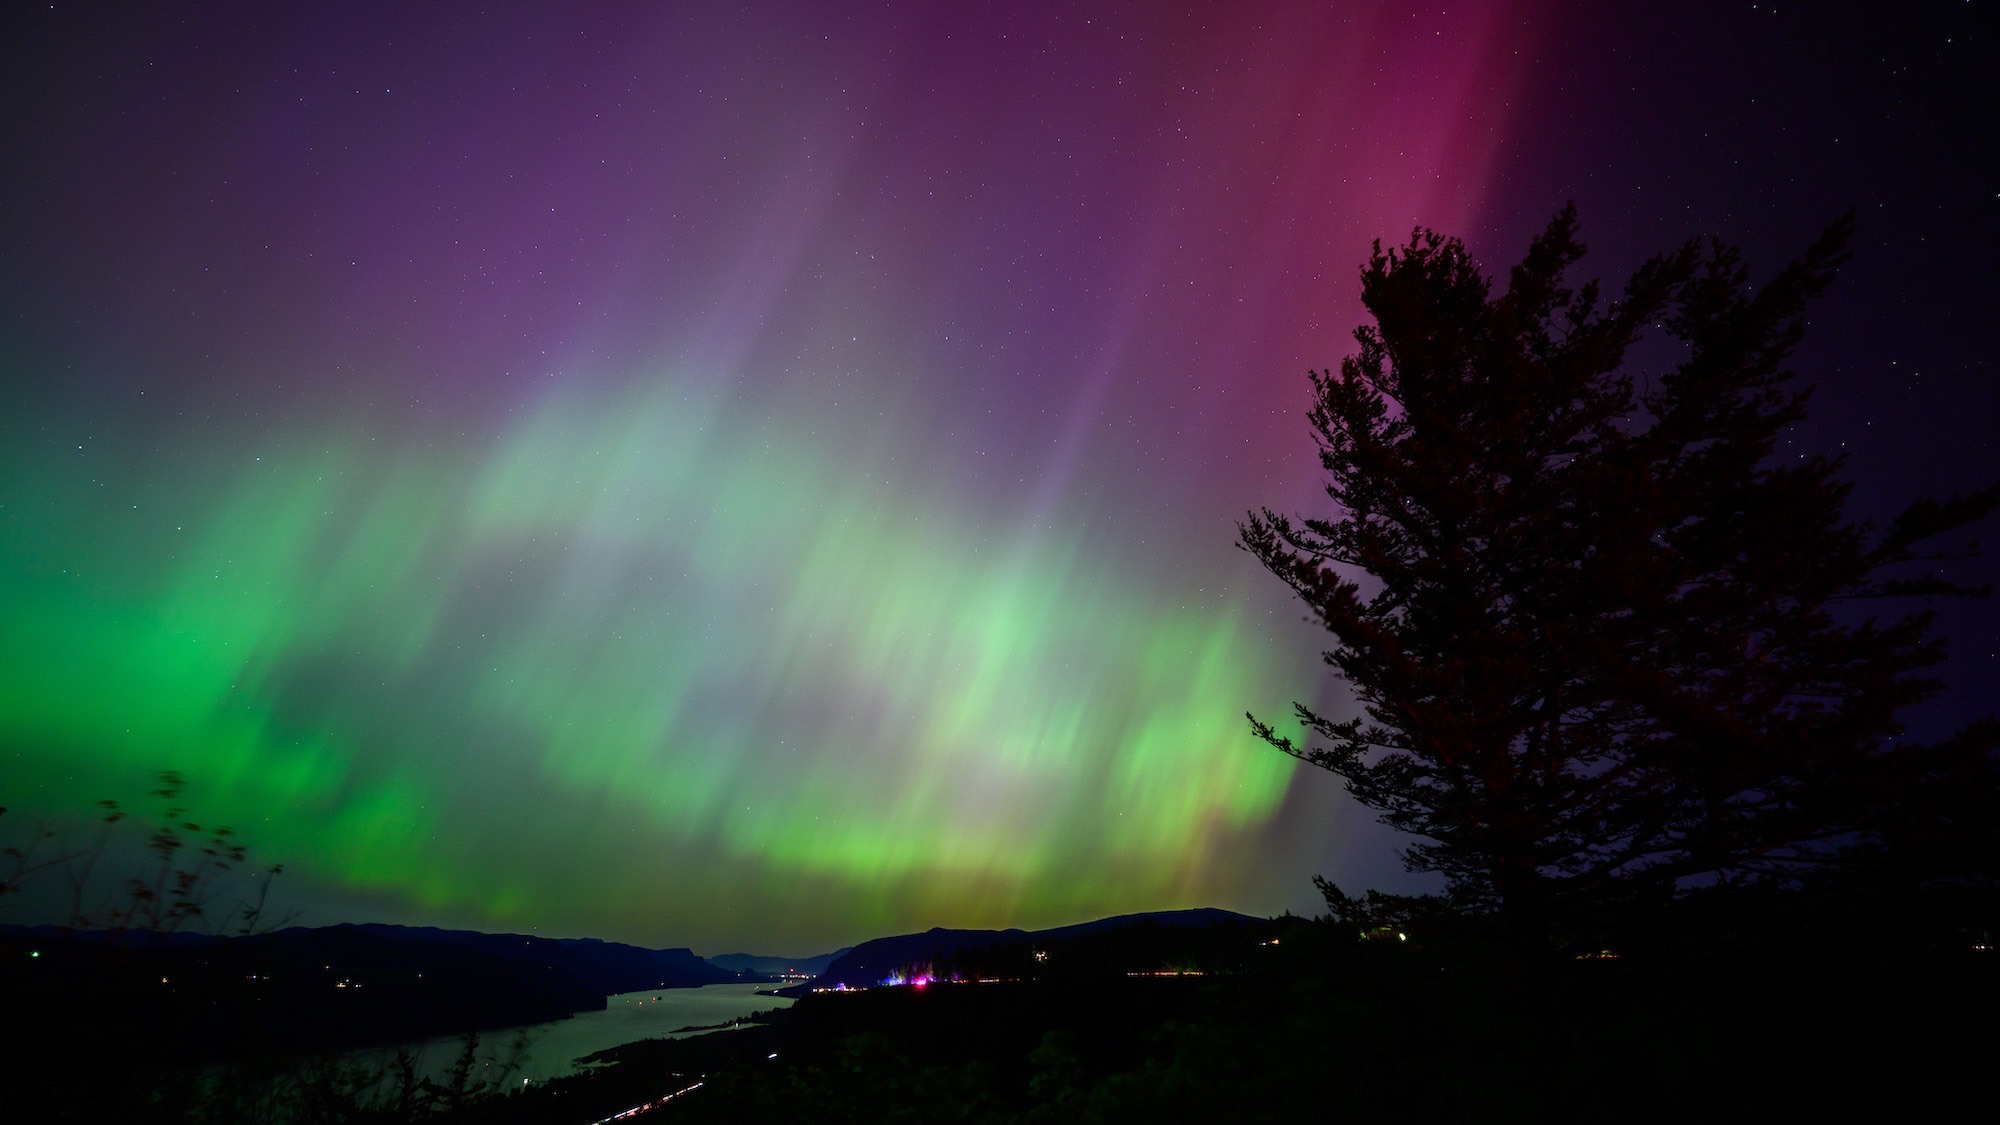 Spectacular aurora photos: Skies dazzle in vivid colors around the world